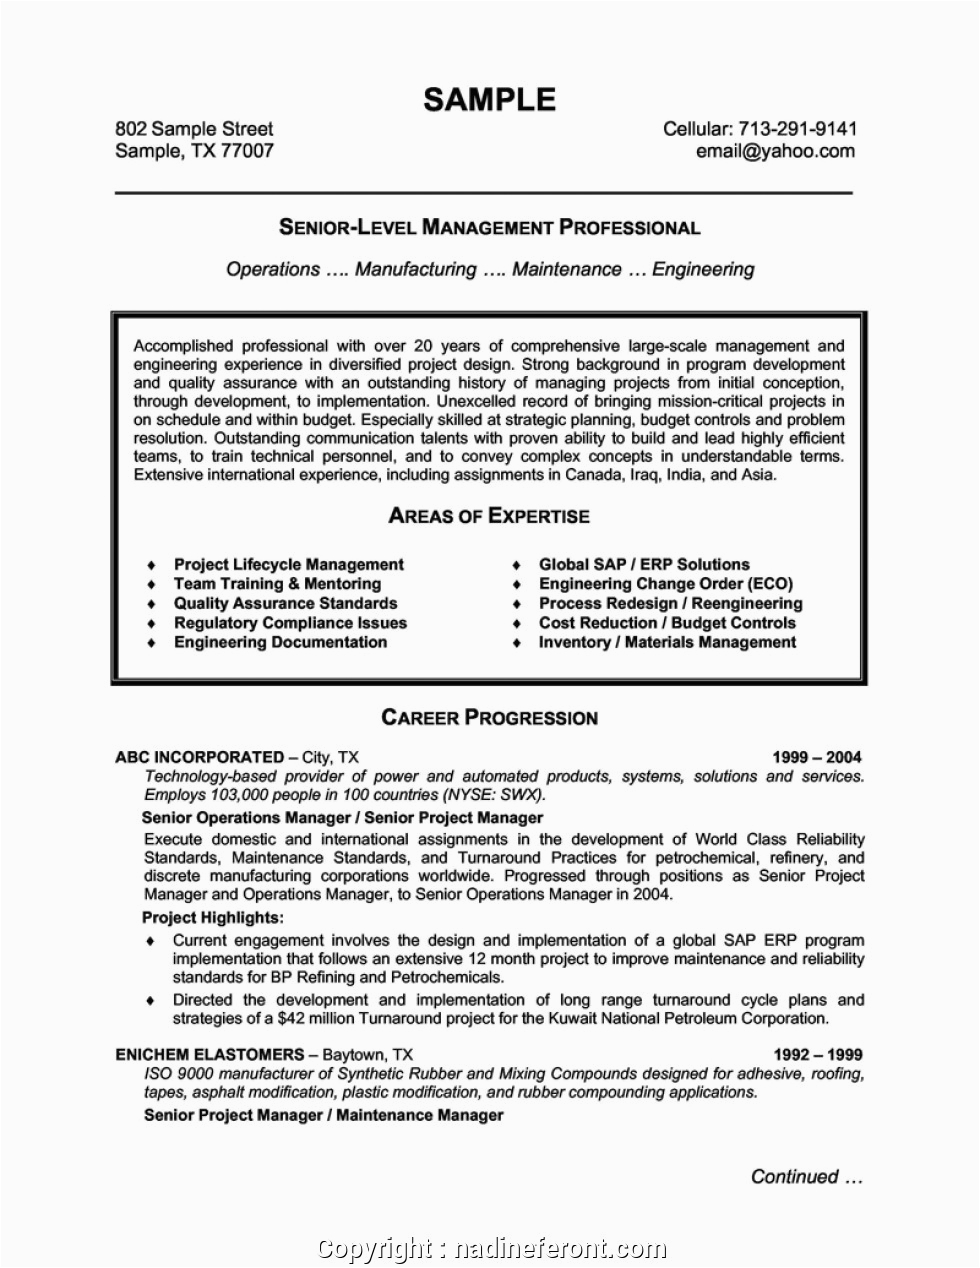 professional management resume profile samples